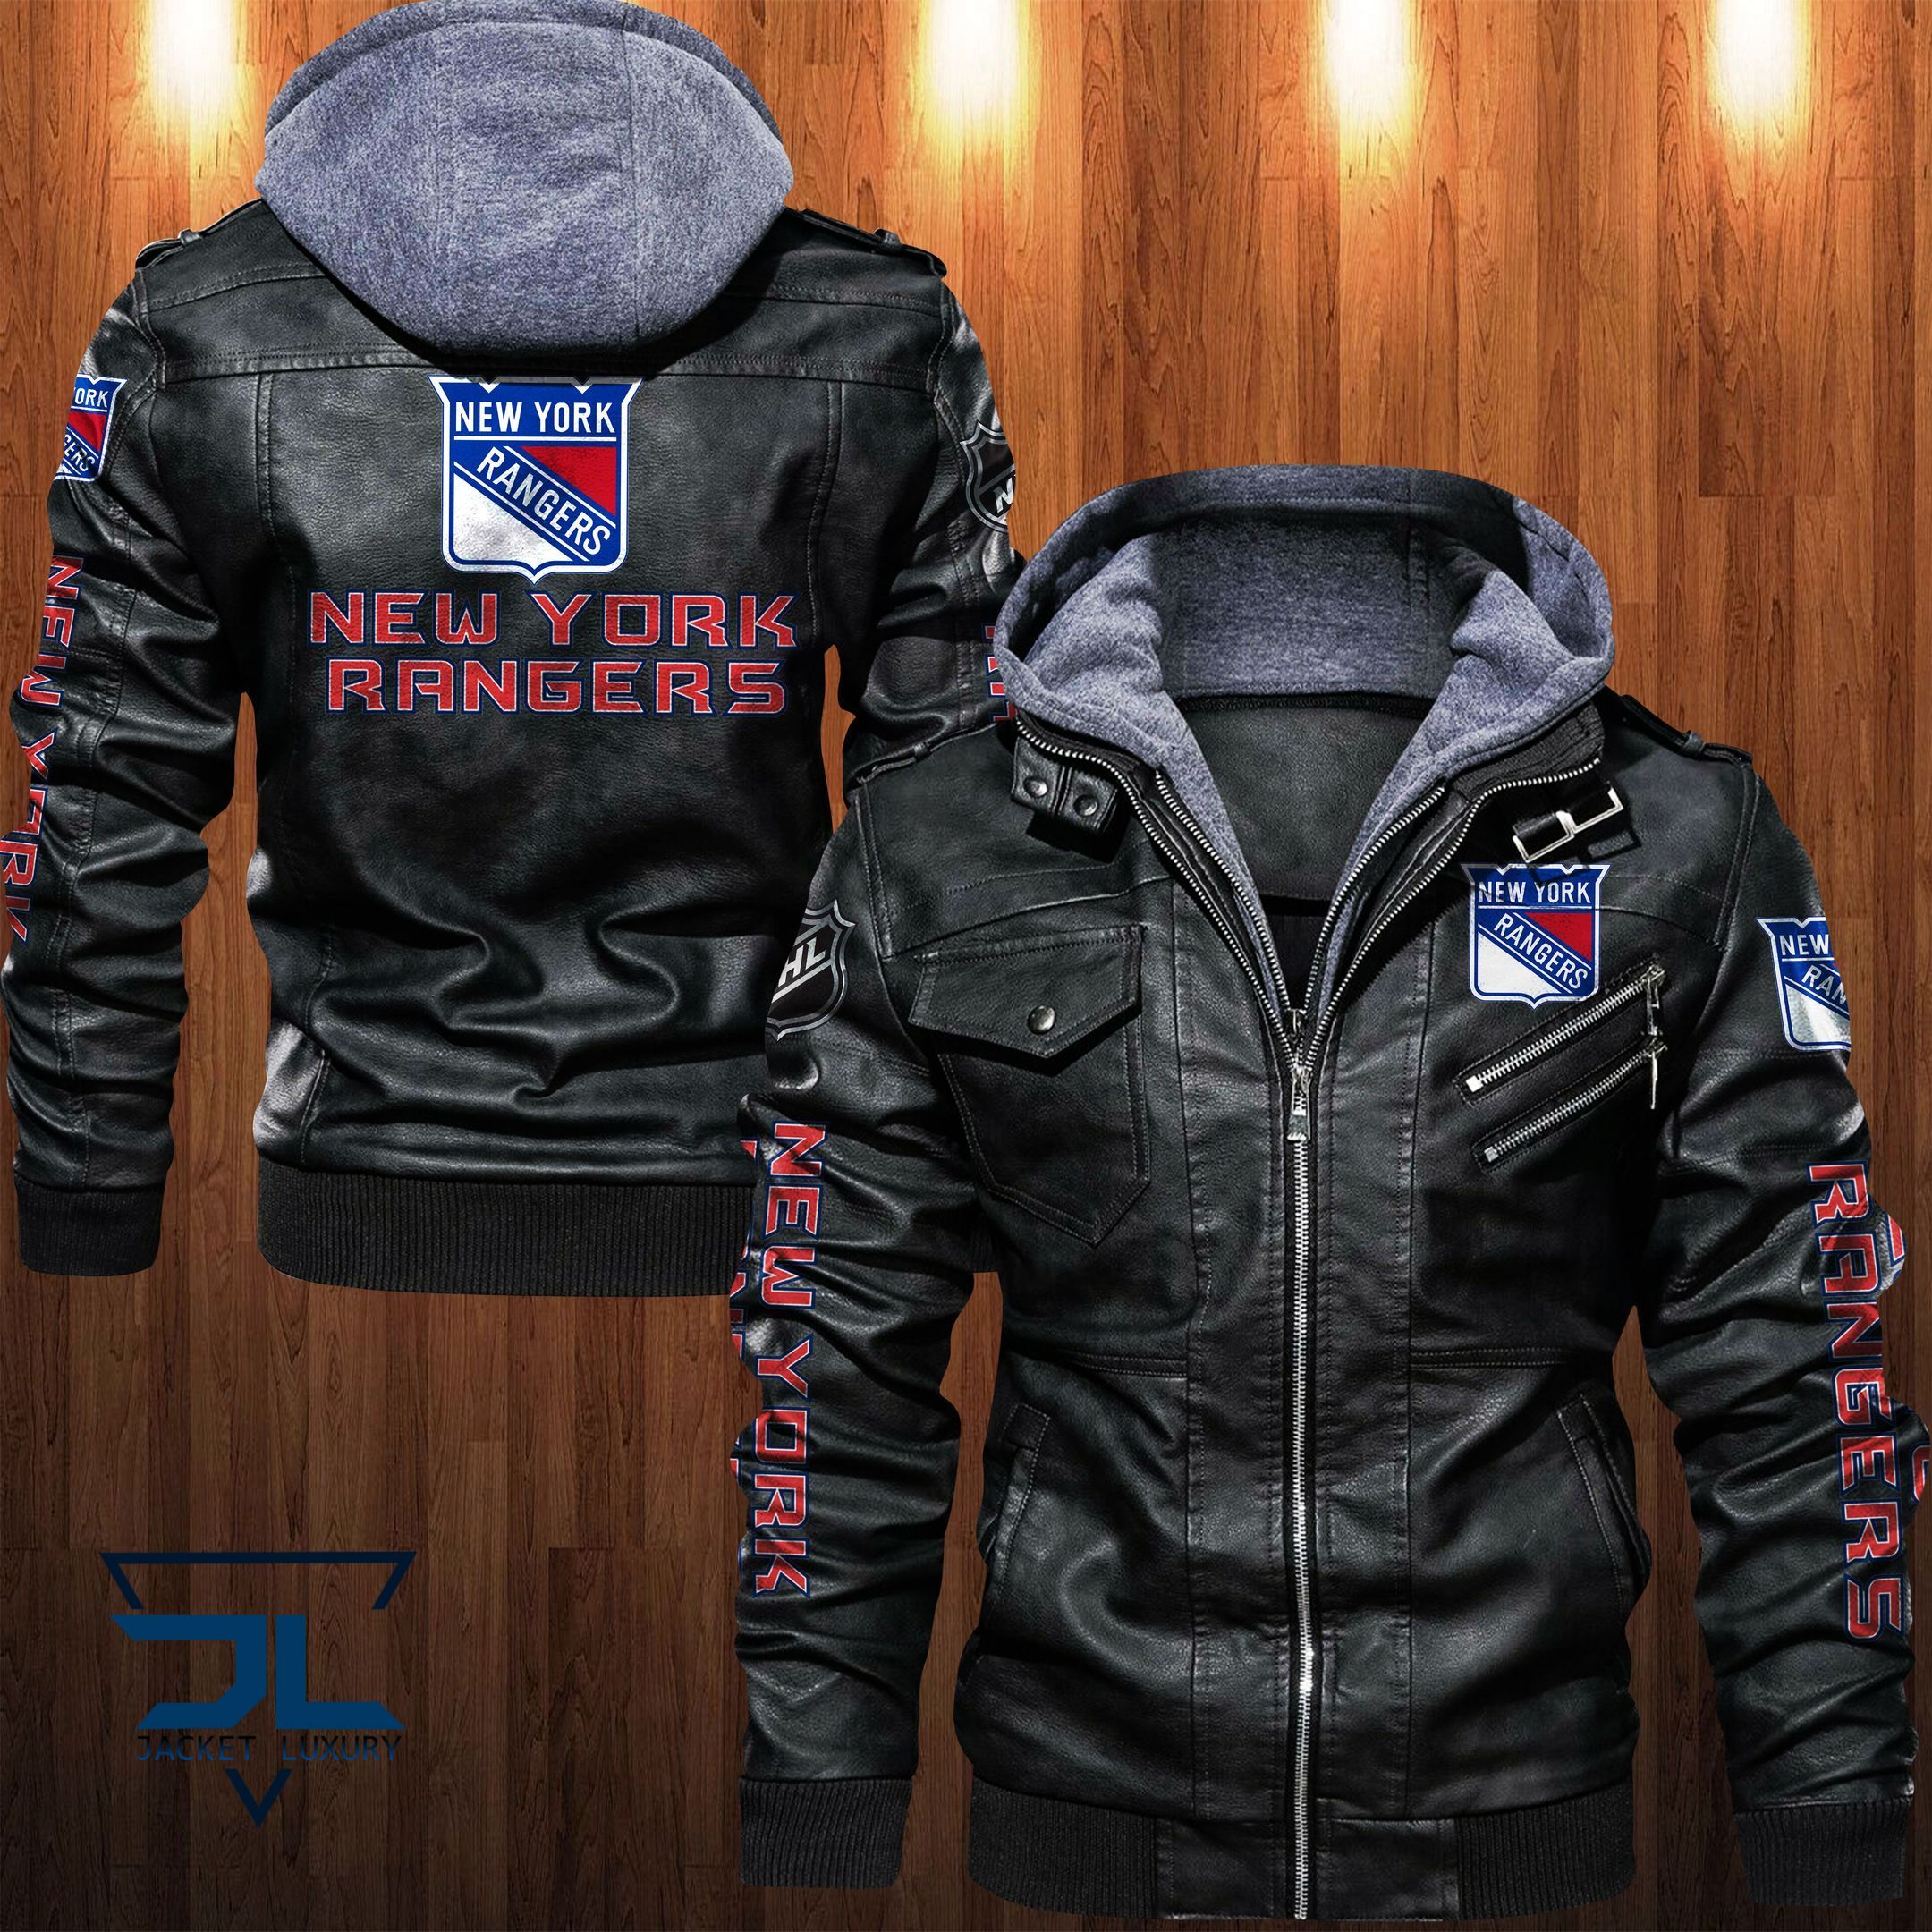 What Leather jacket Sells Best on Techcomshop? 192